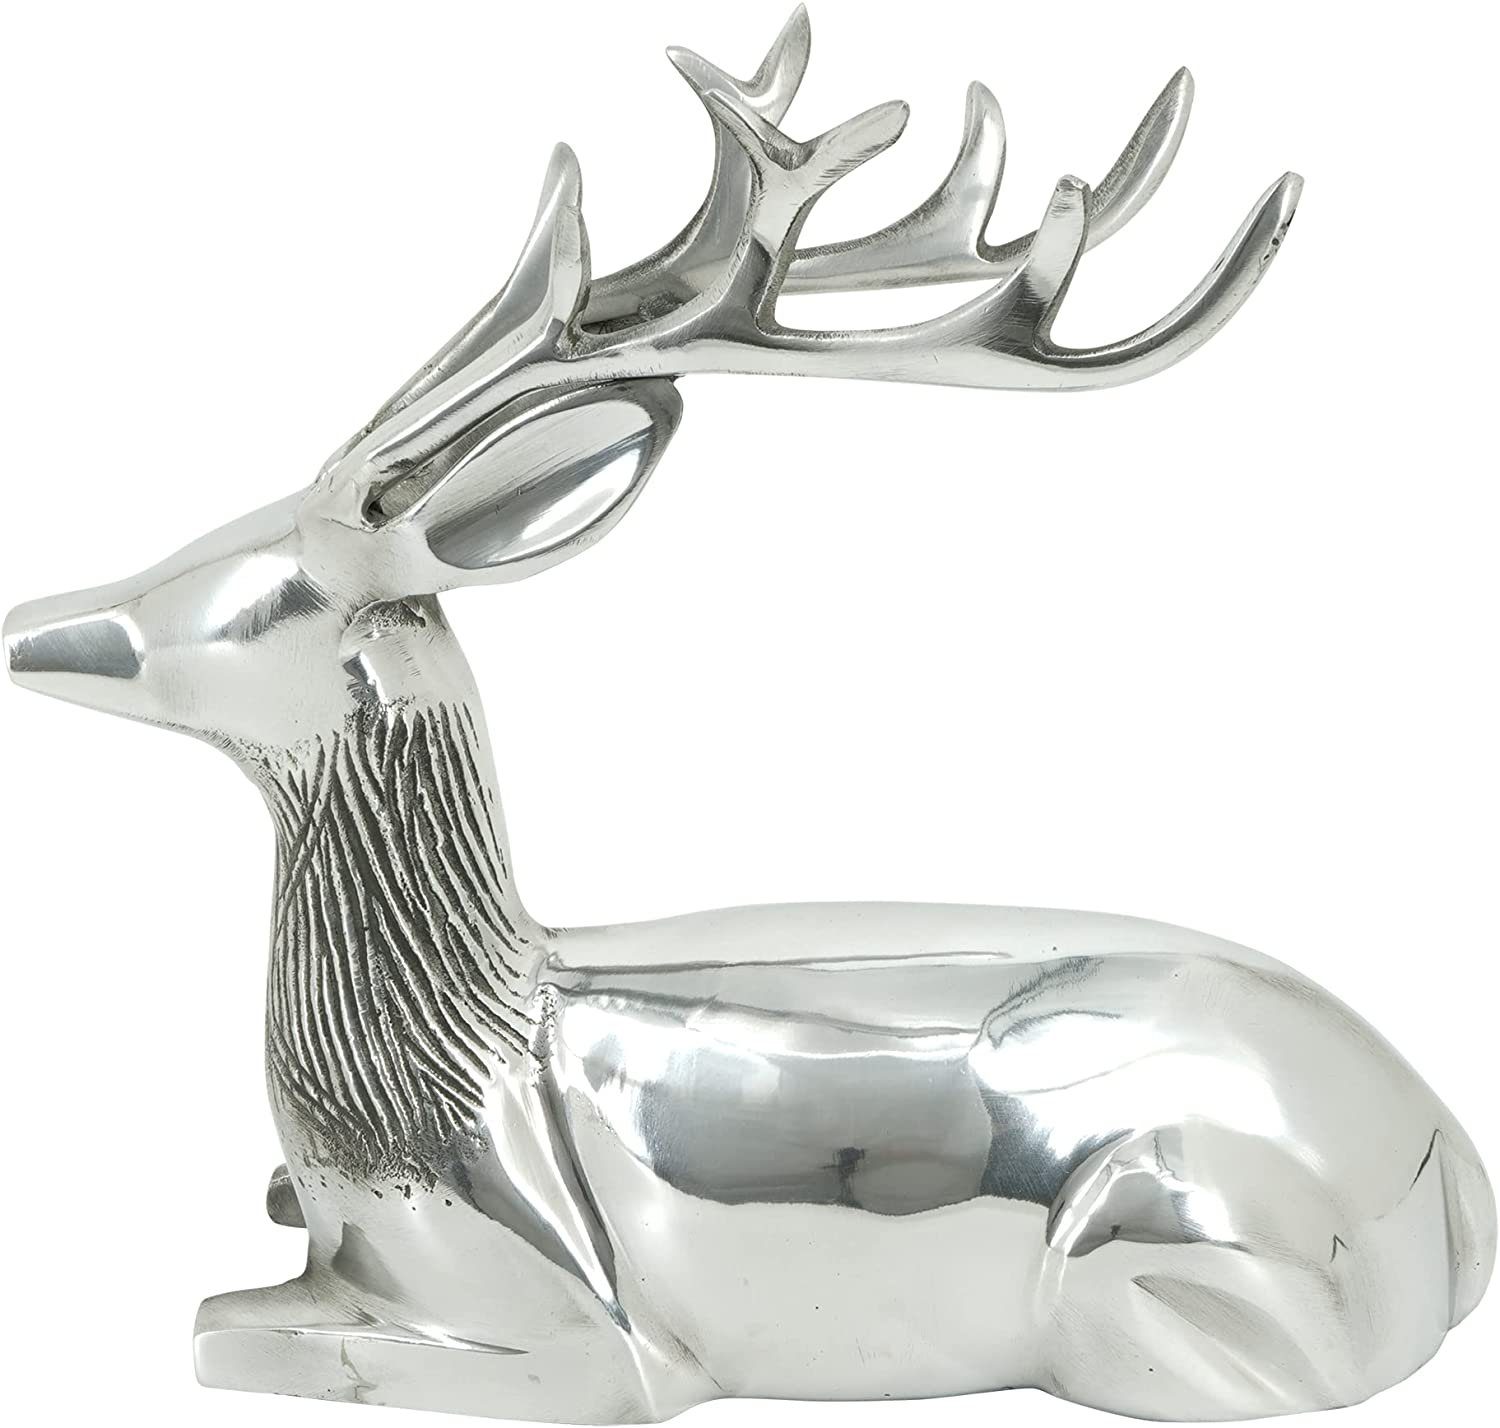 Lesli Silber Deko Aluminium liegend 33x13x29cm Dekofigur Living Figur Hirsch Skulptur